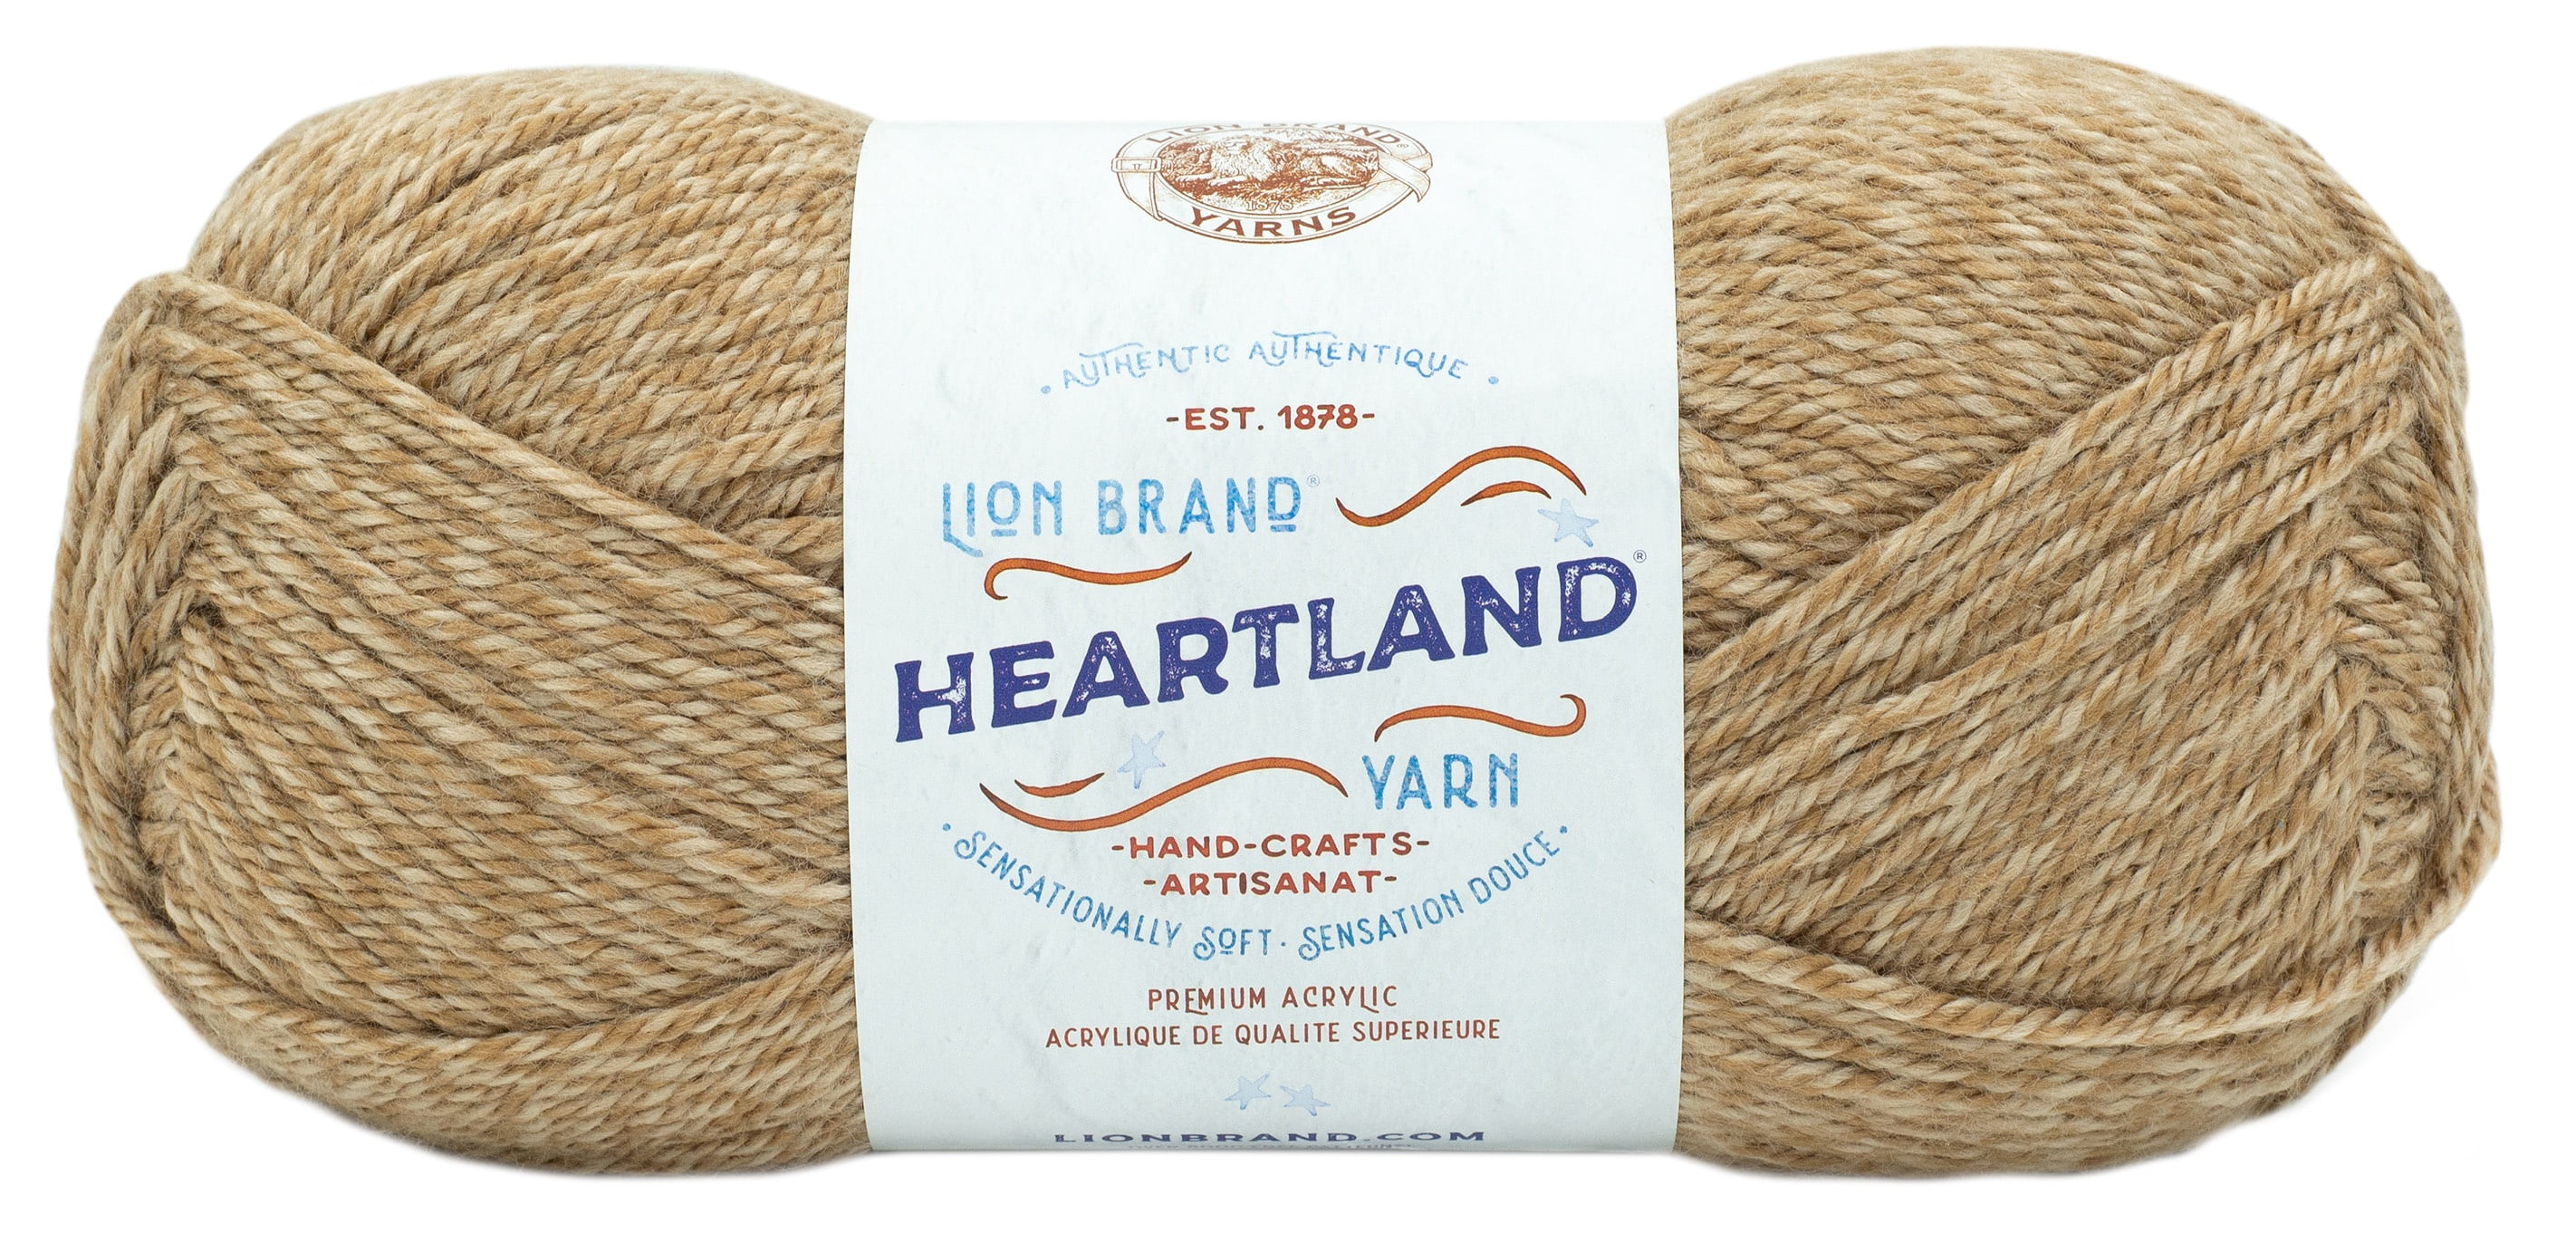 (2) Lion Brand Heartland Yarn/Haleakala/251 yds 5 oz Each/ New.